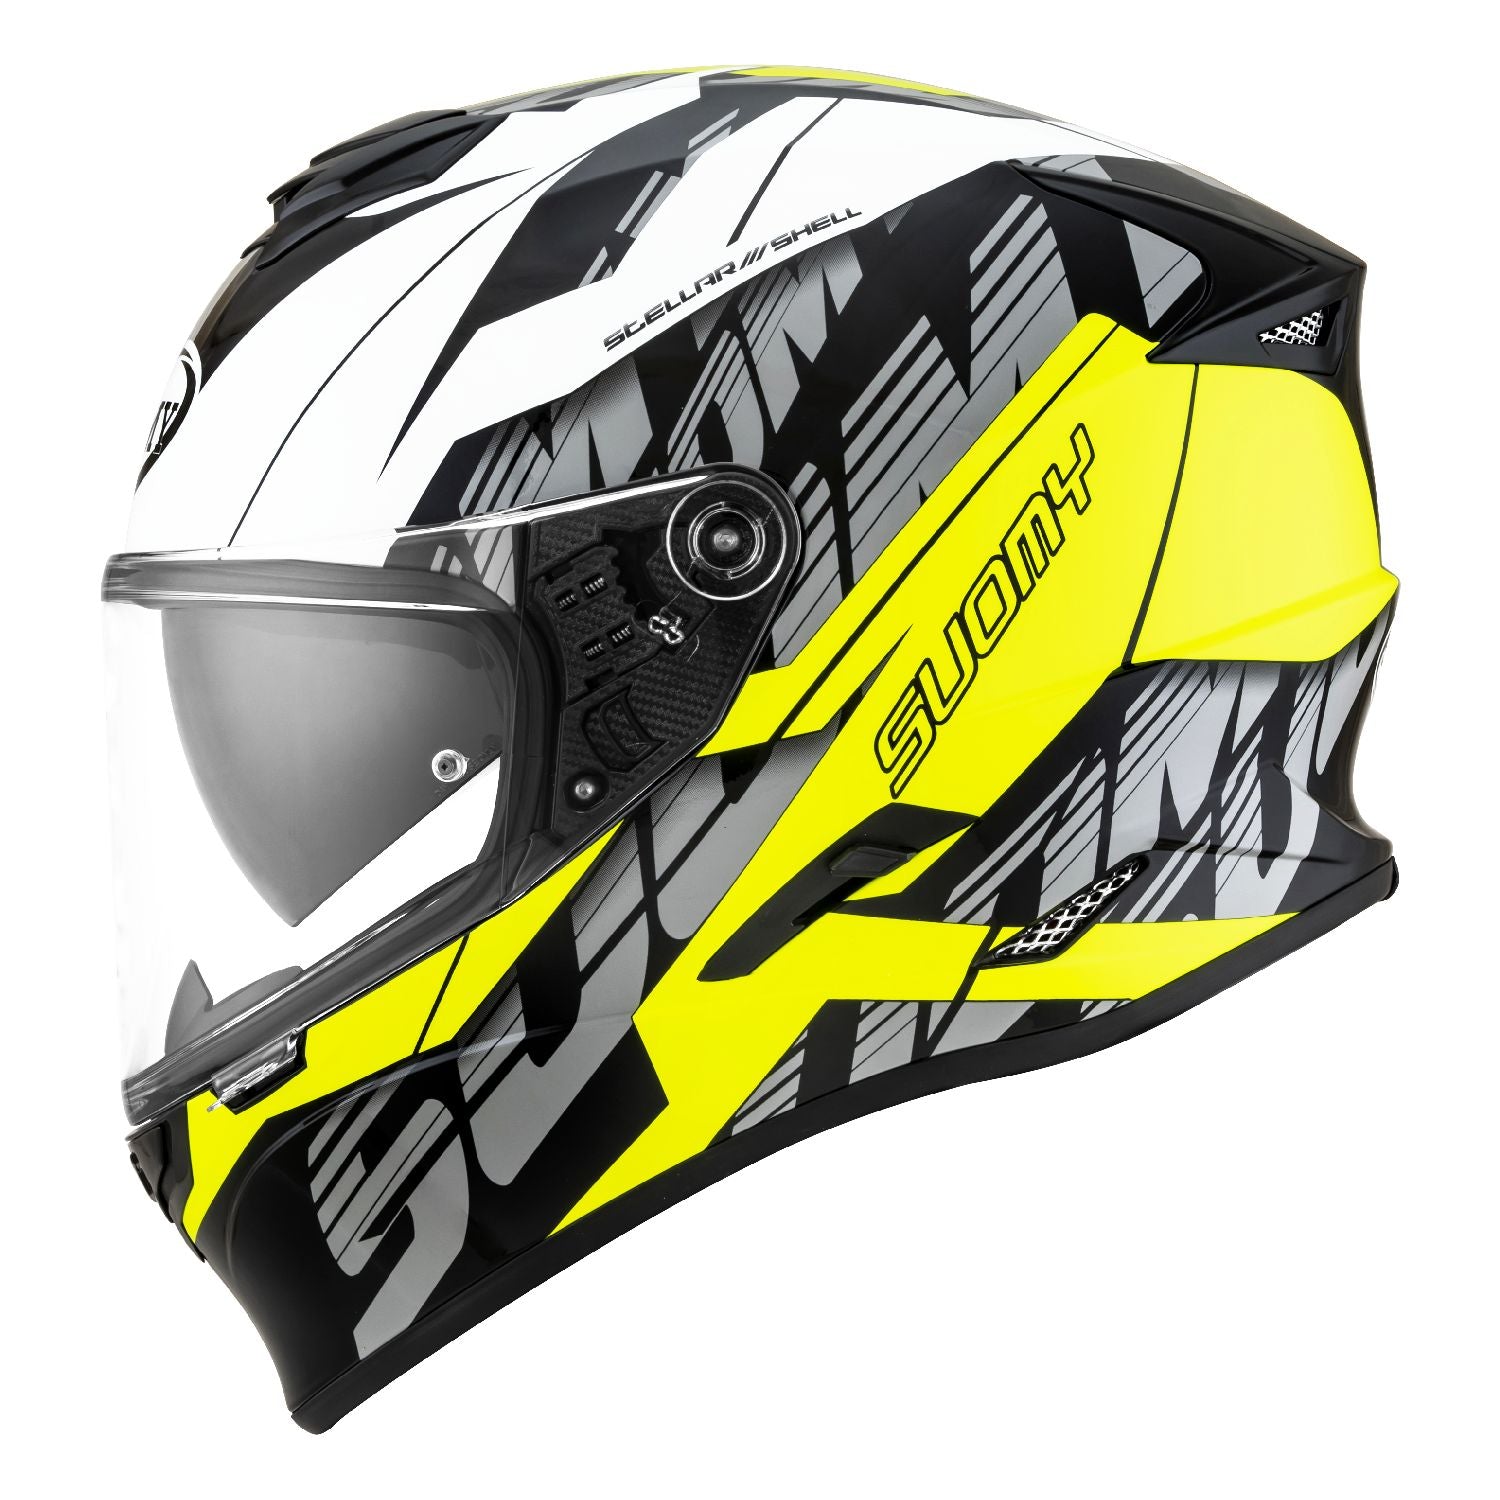 Suomy Stellar Corner Yellow Full Face Motorcycle Helmet (XS - 2XL)